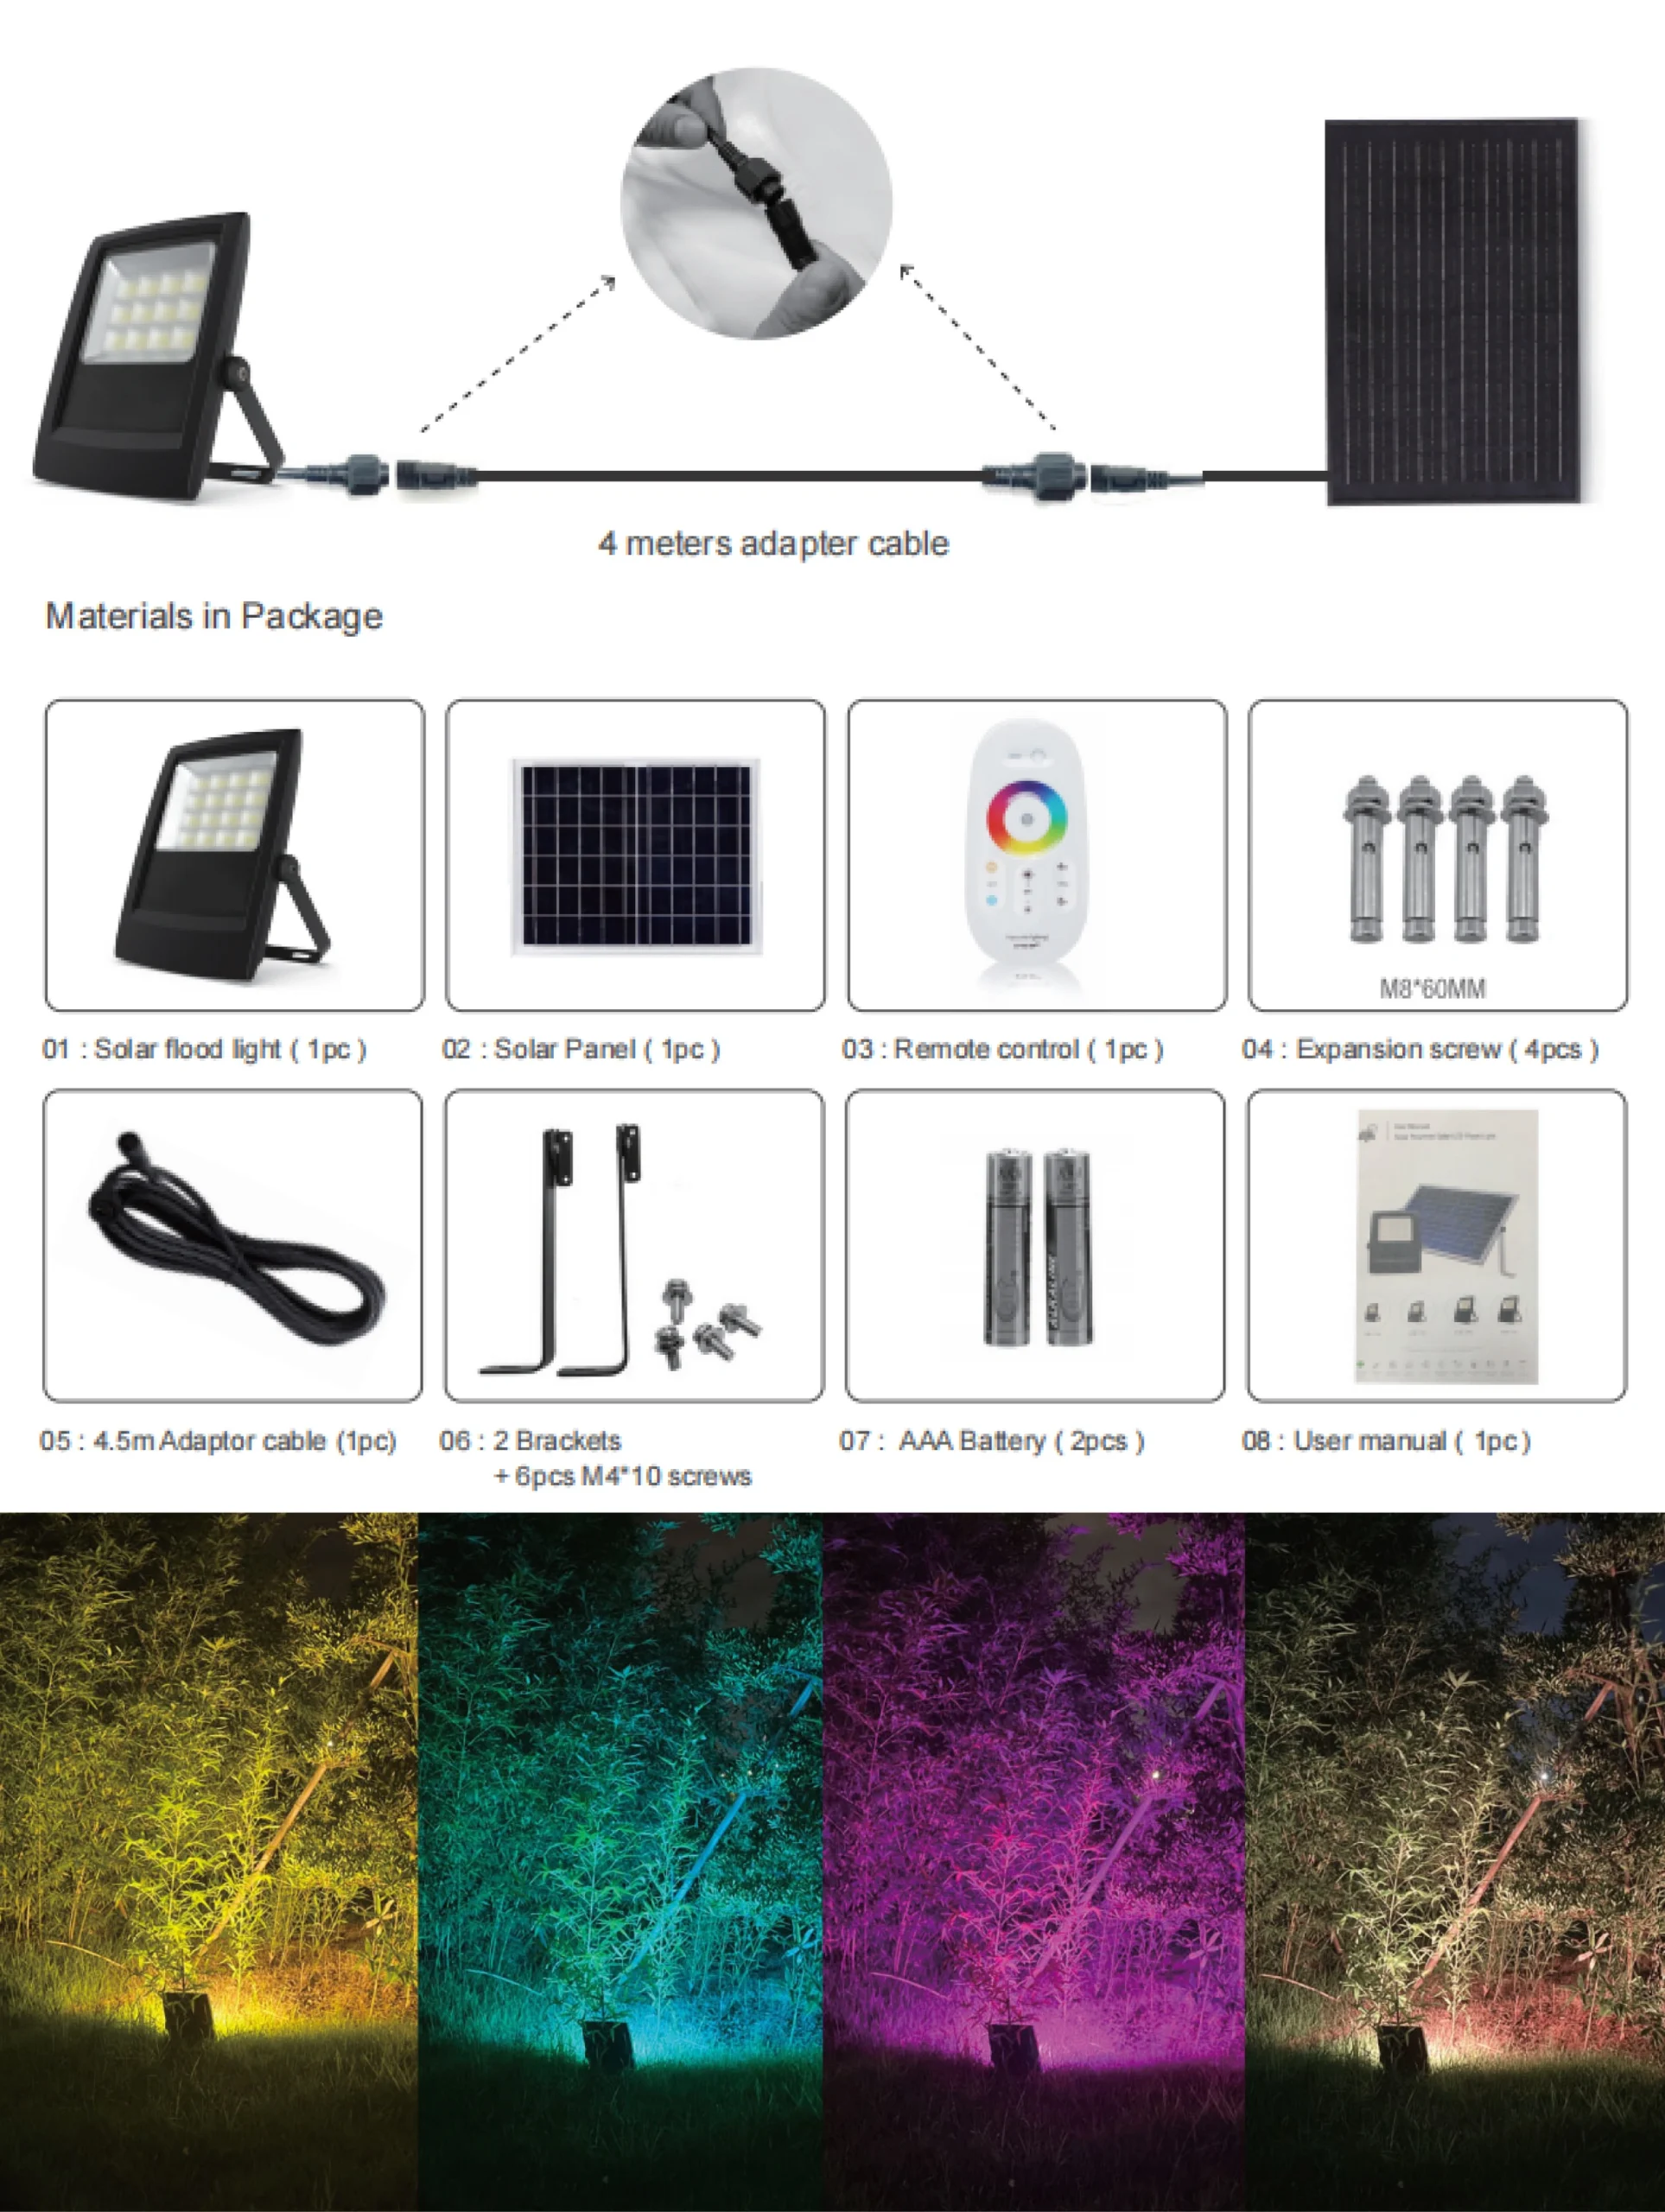 Radiance Solar LED flood light ecoolpower packing list scaled ECOOL POWER